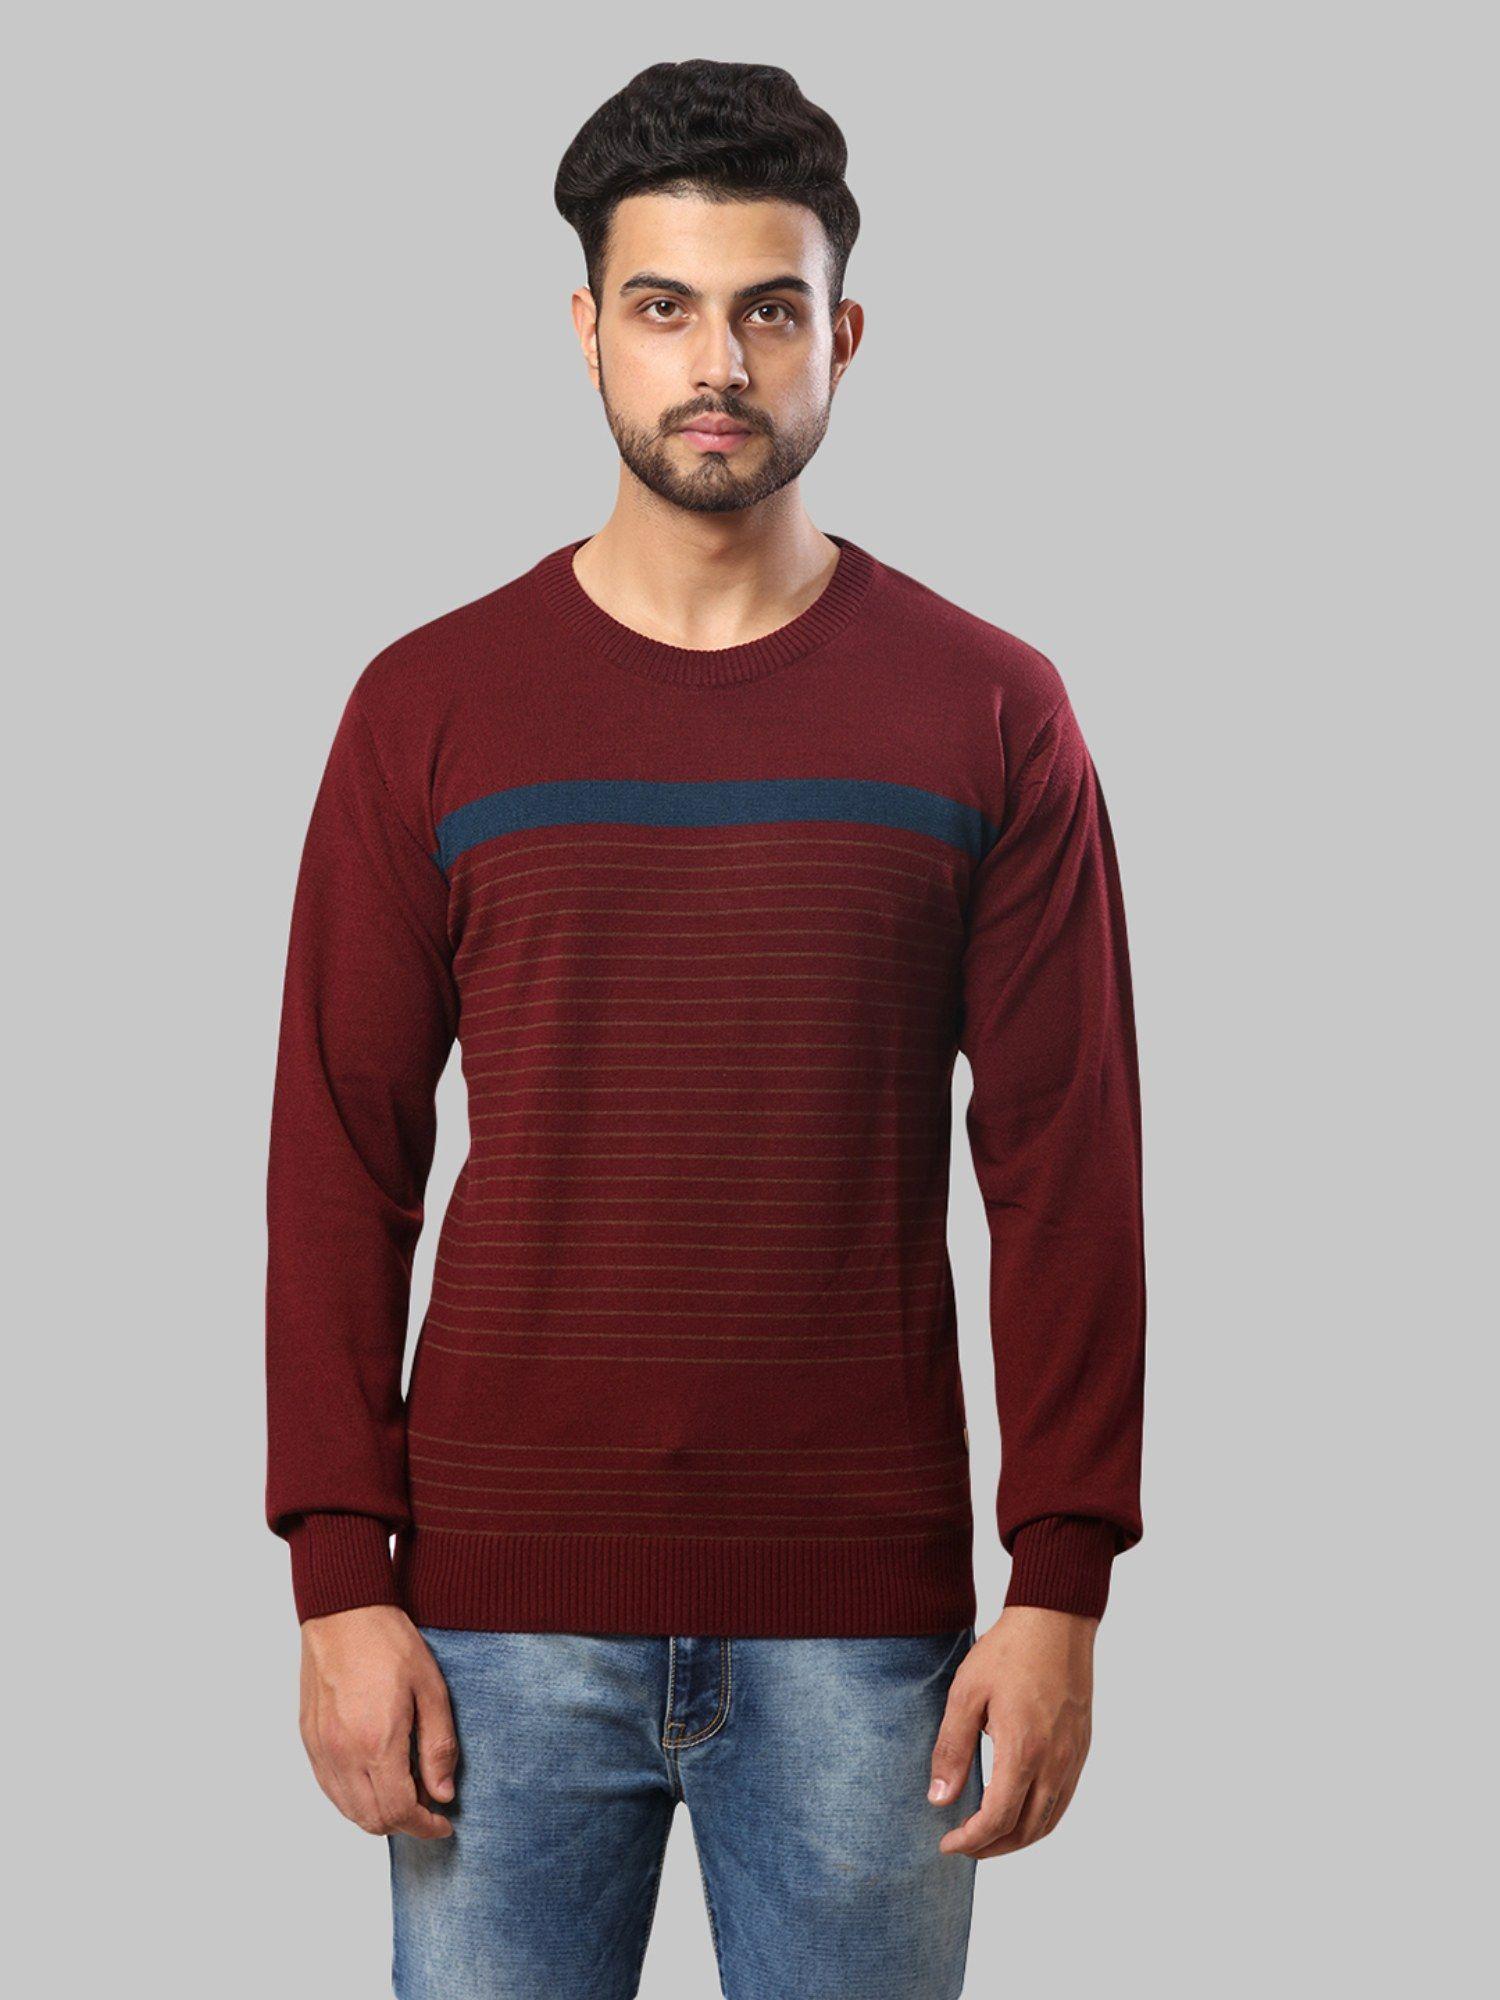 dark maroon sweater